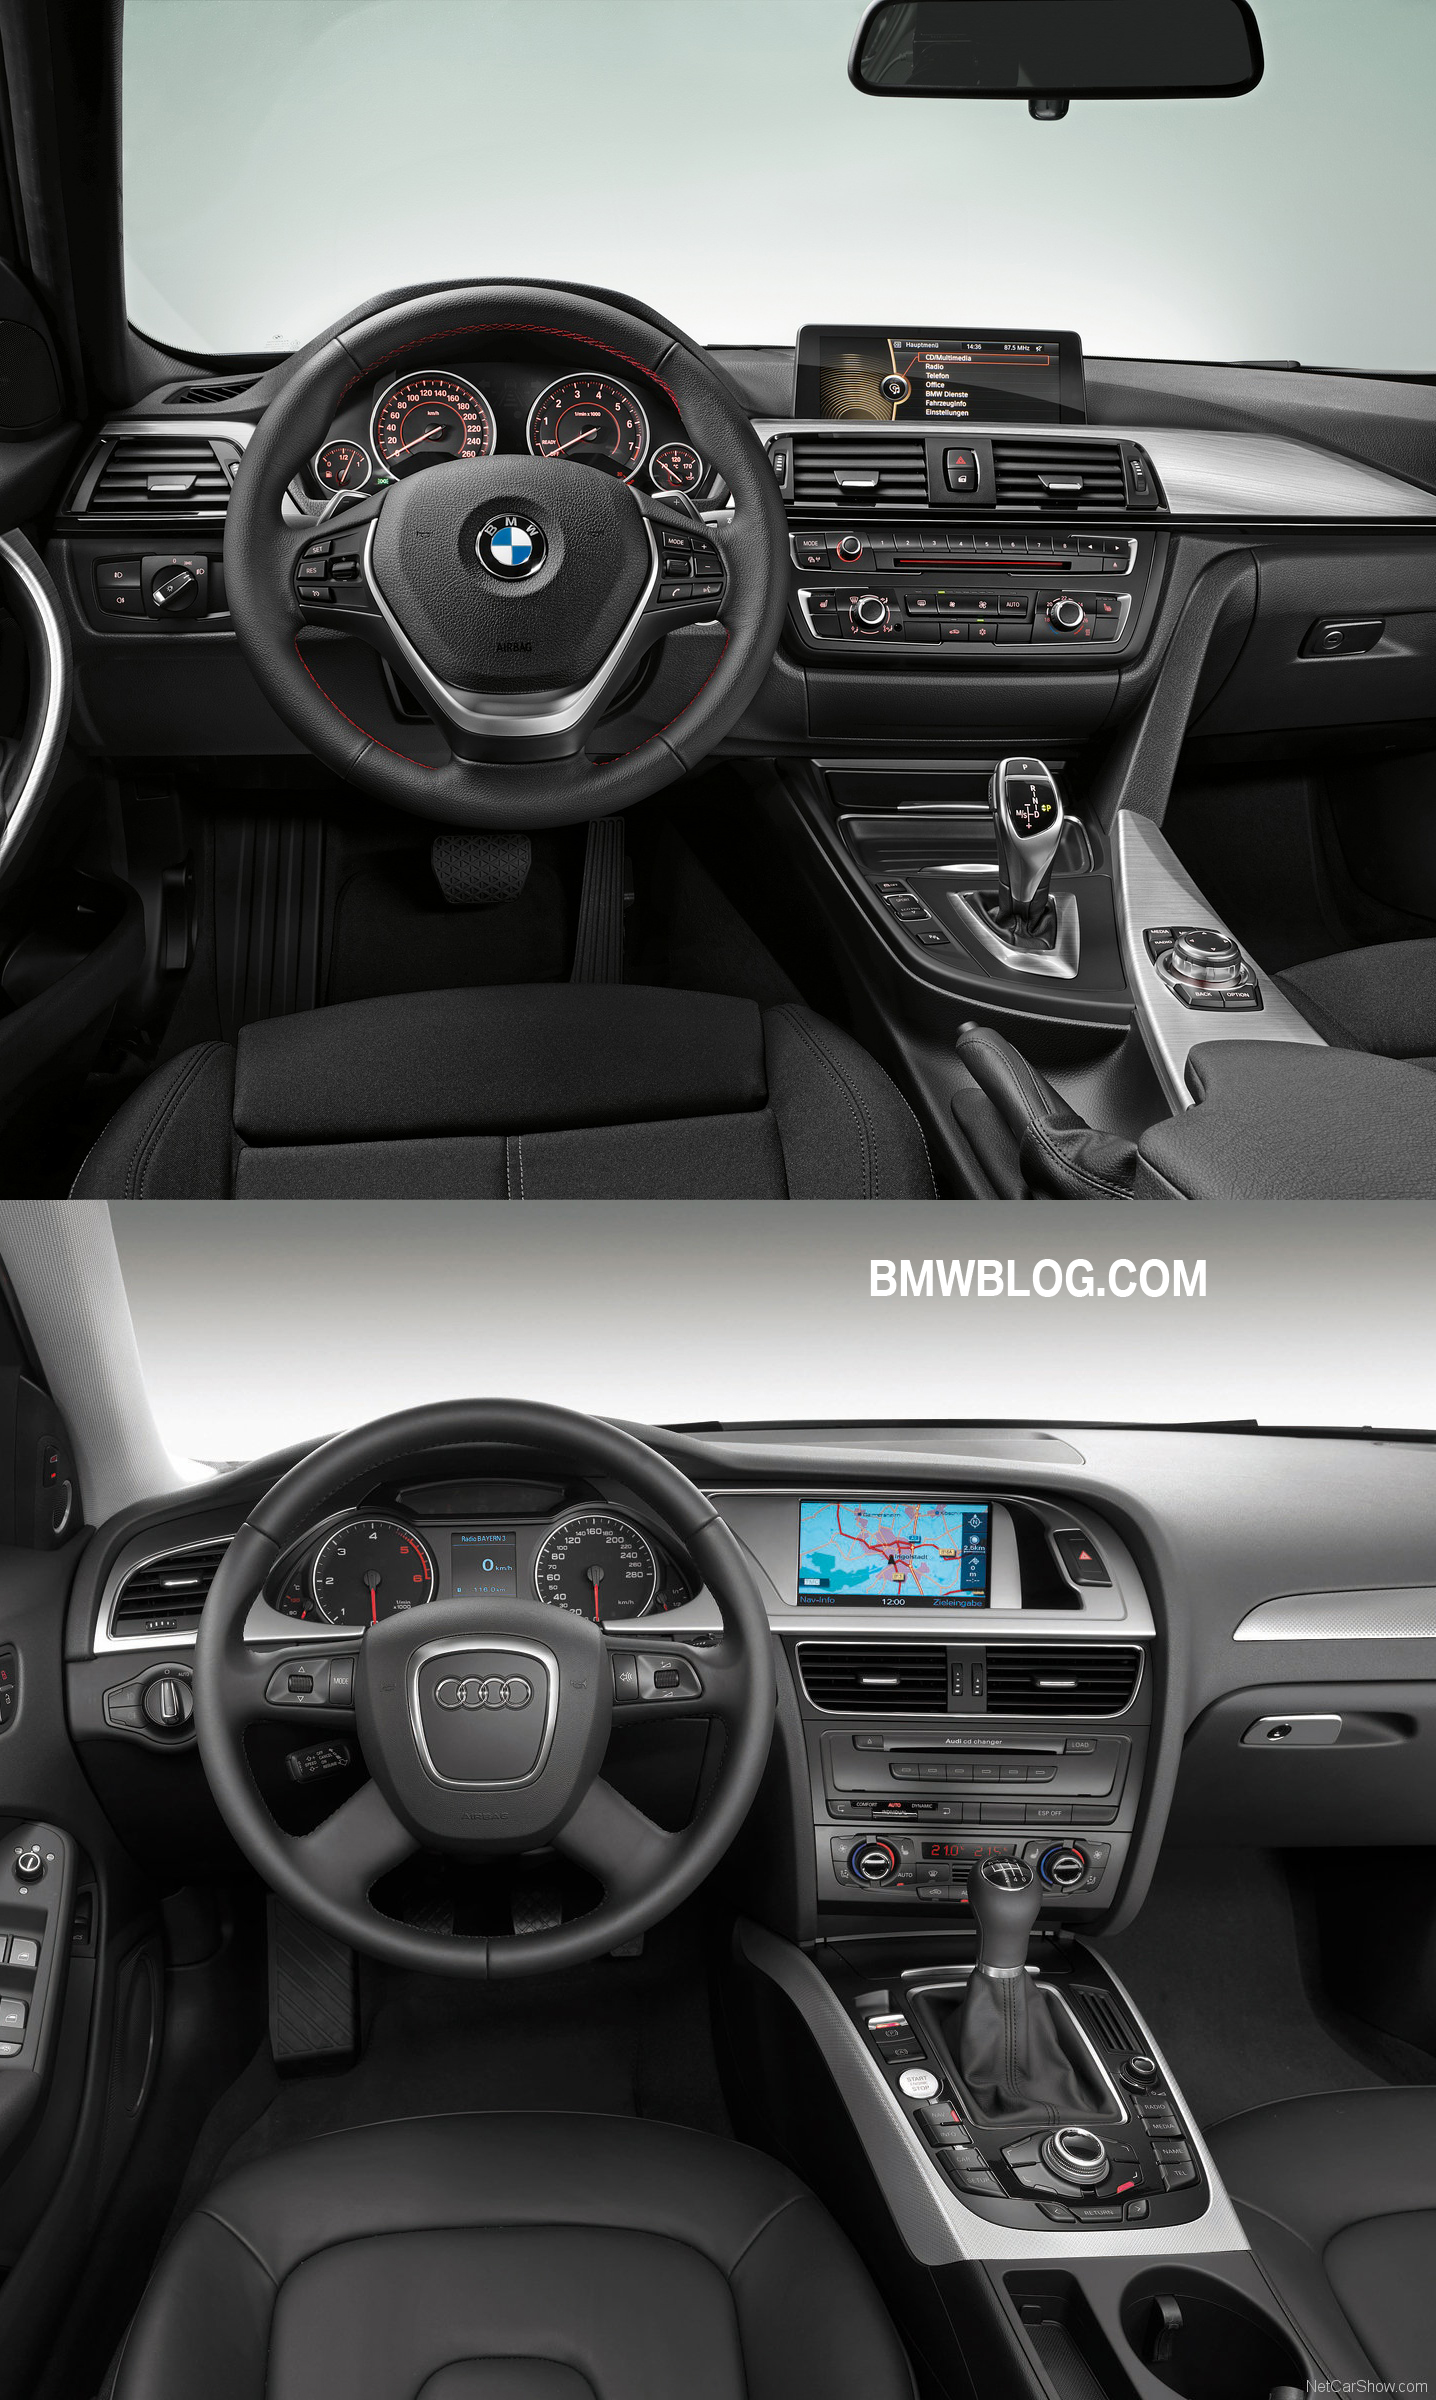 BMW-3-series-vs-audi-a4-photo8.jpg